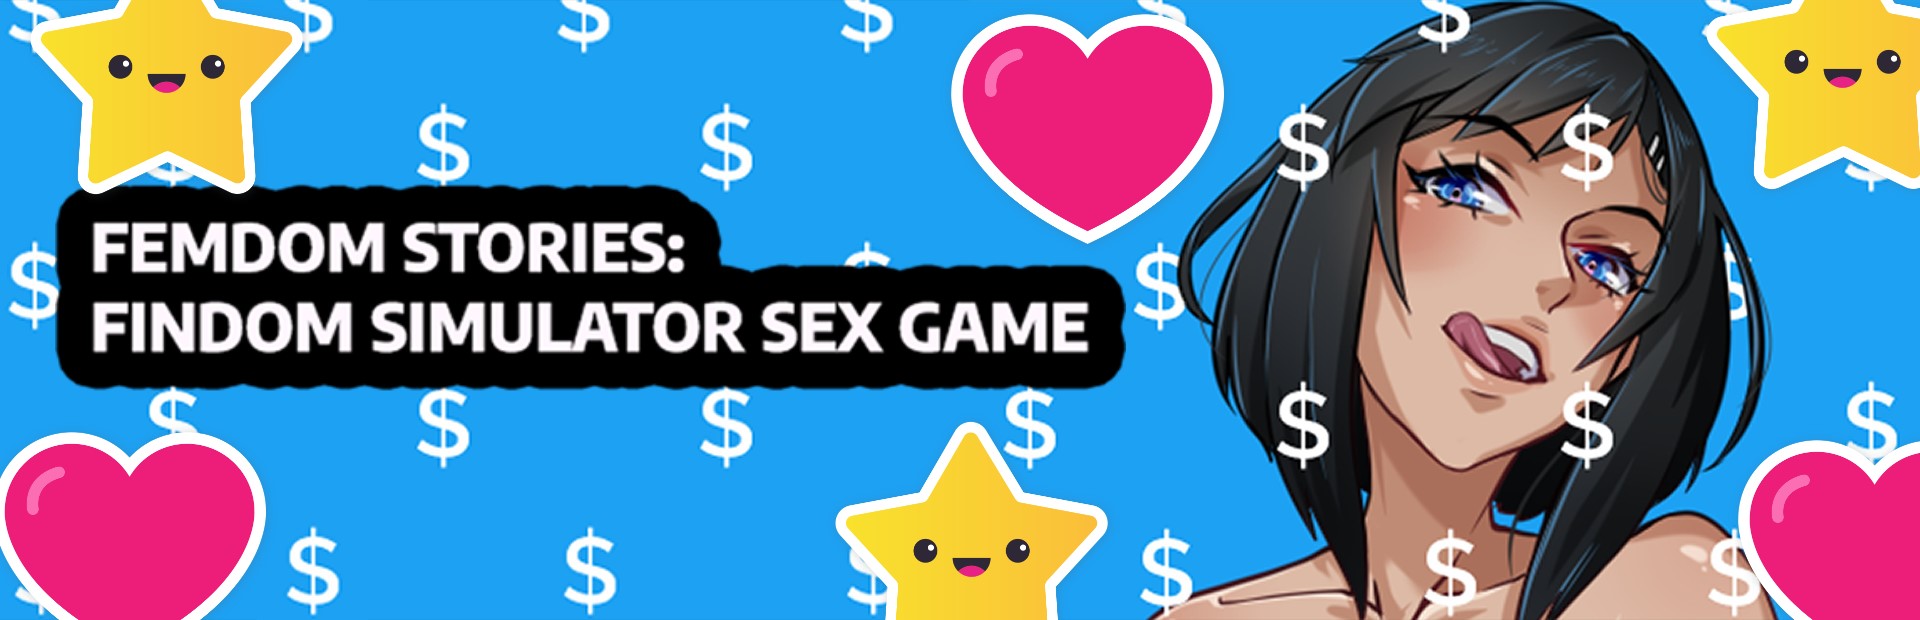 Femdom Stories: Findom Simulator Sex Game poster